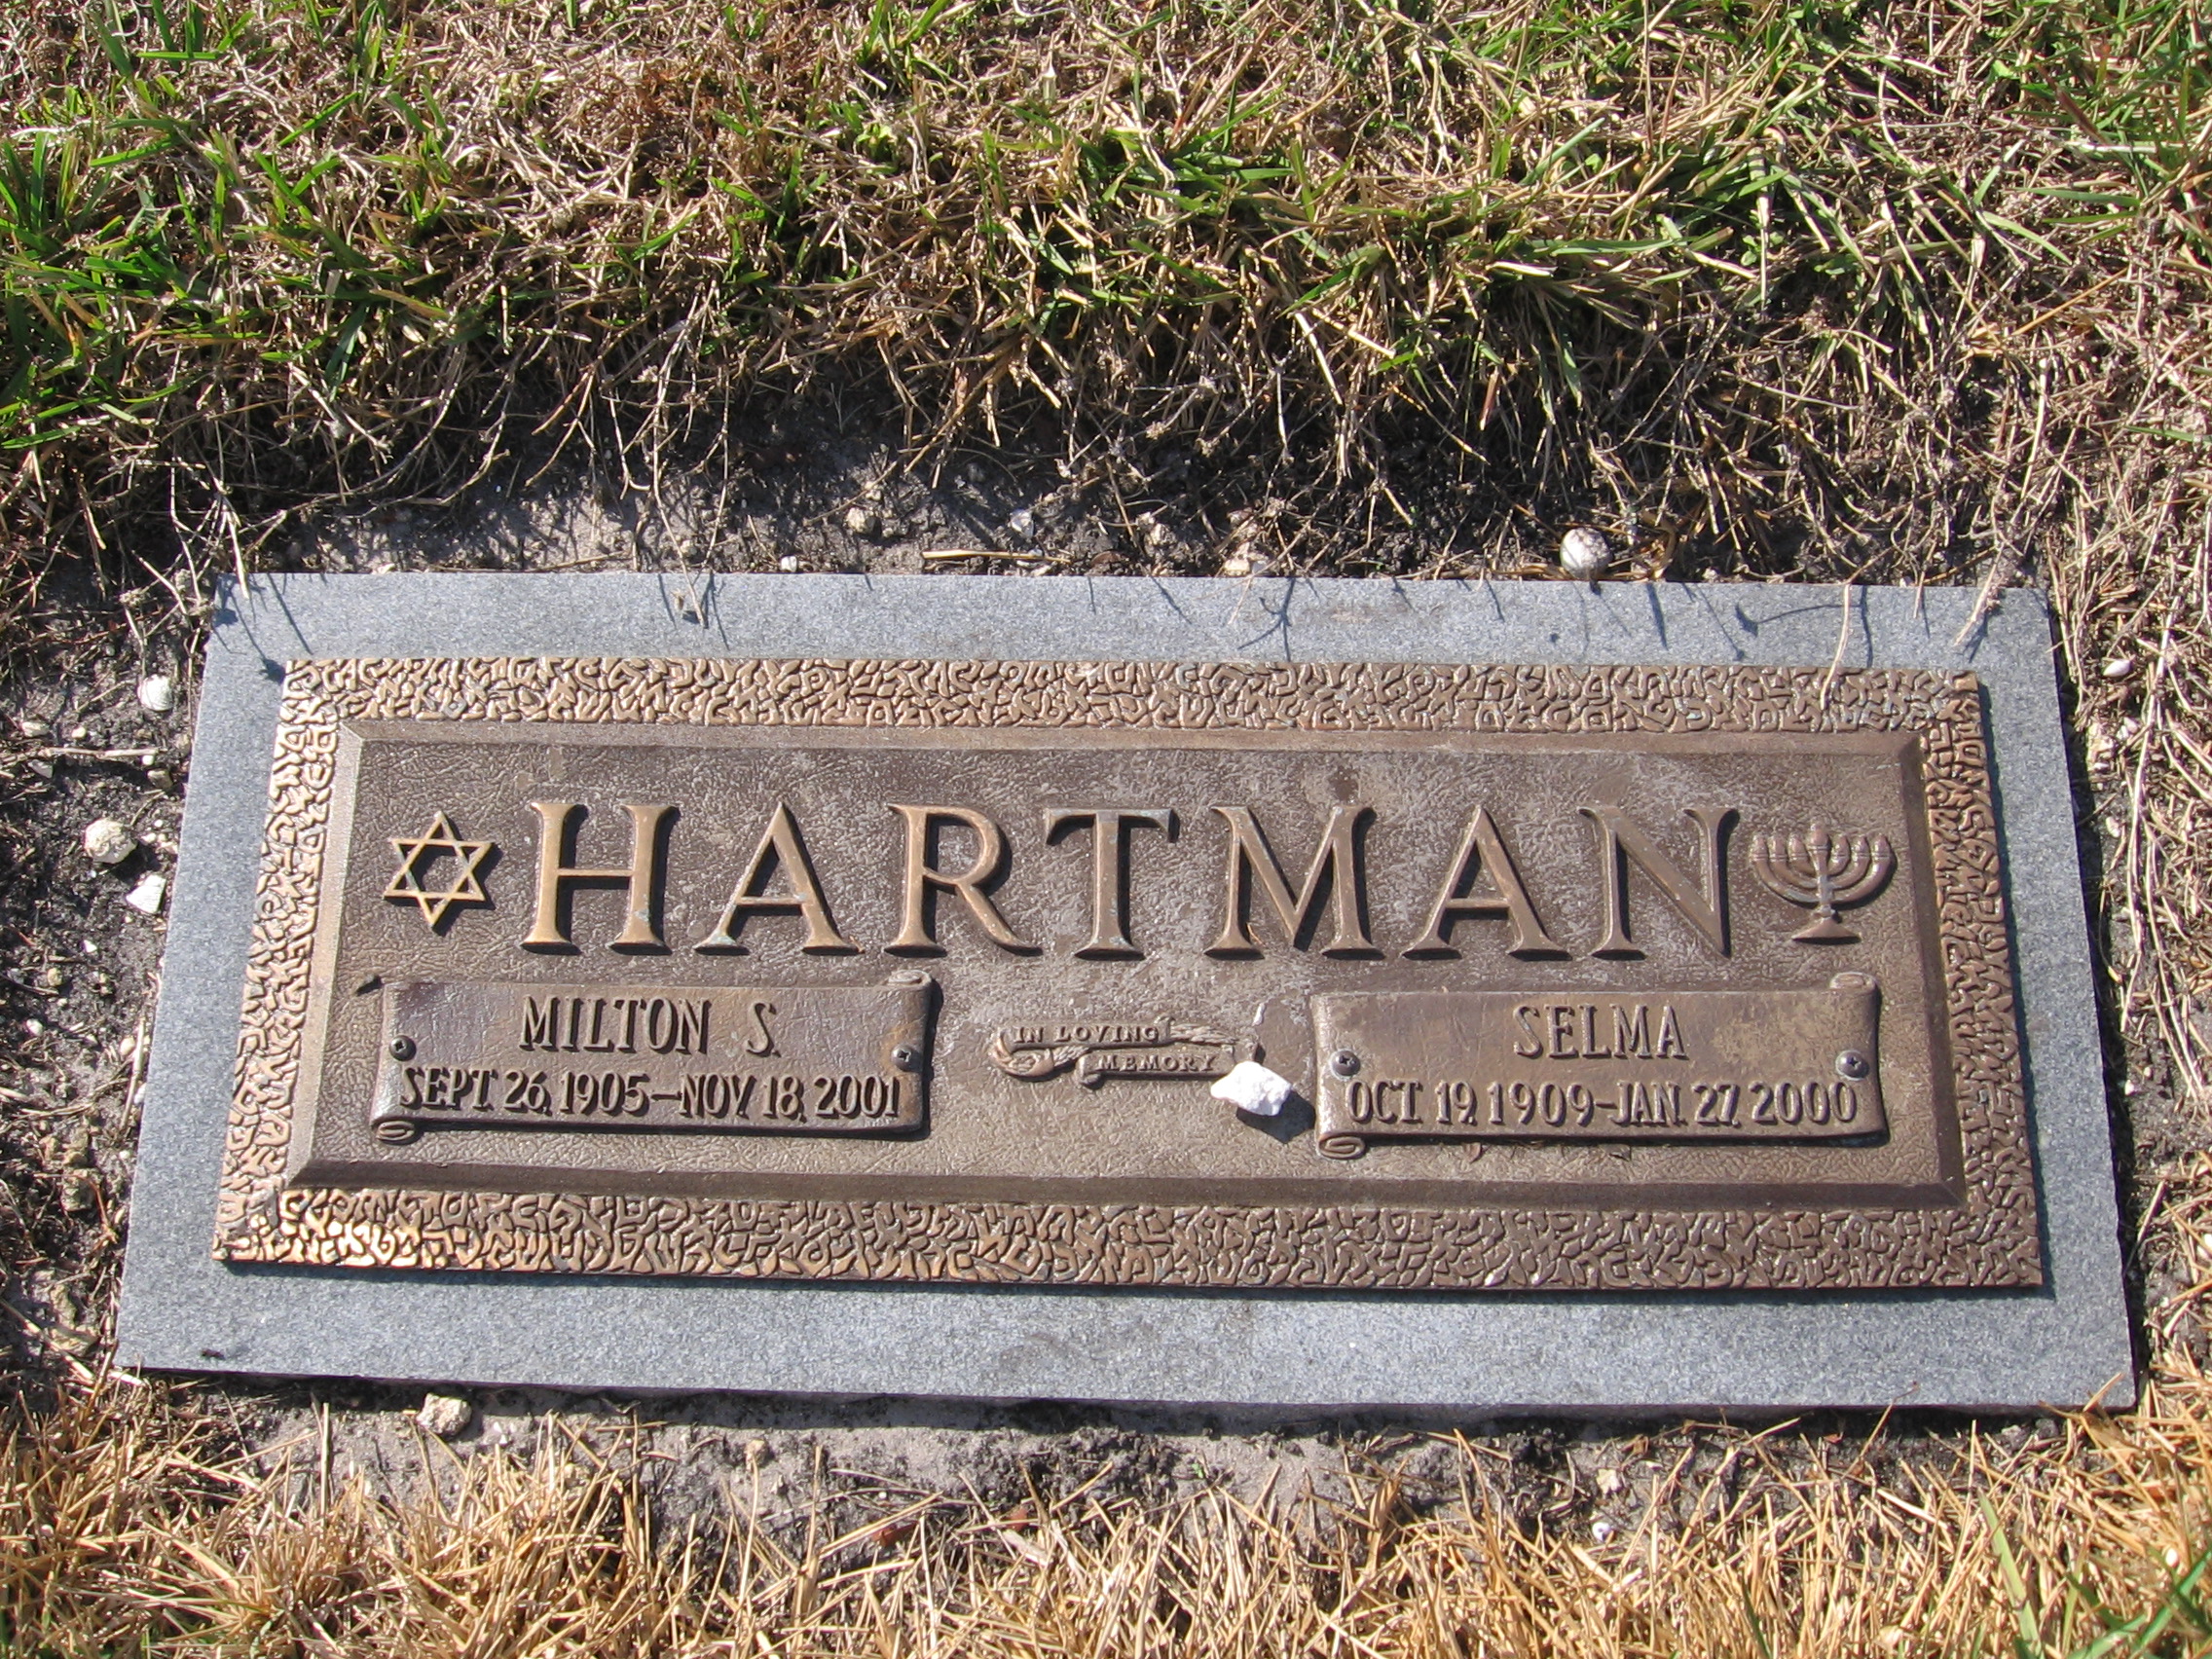 Milton S Hartman